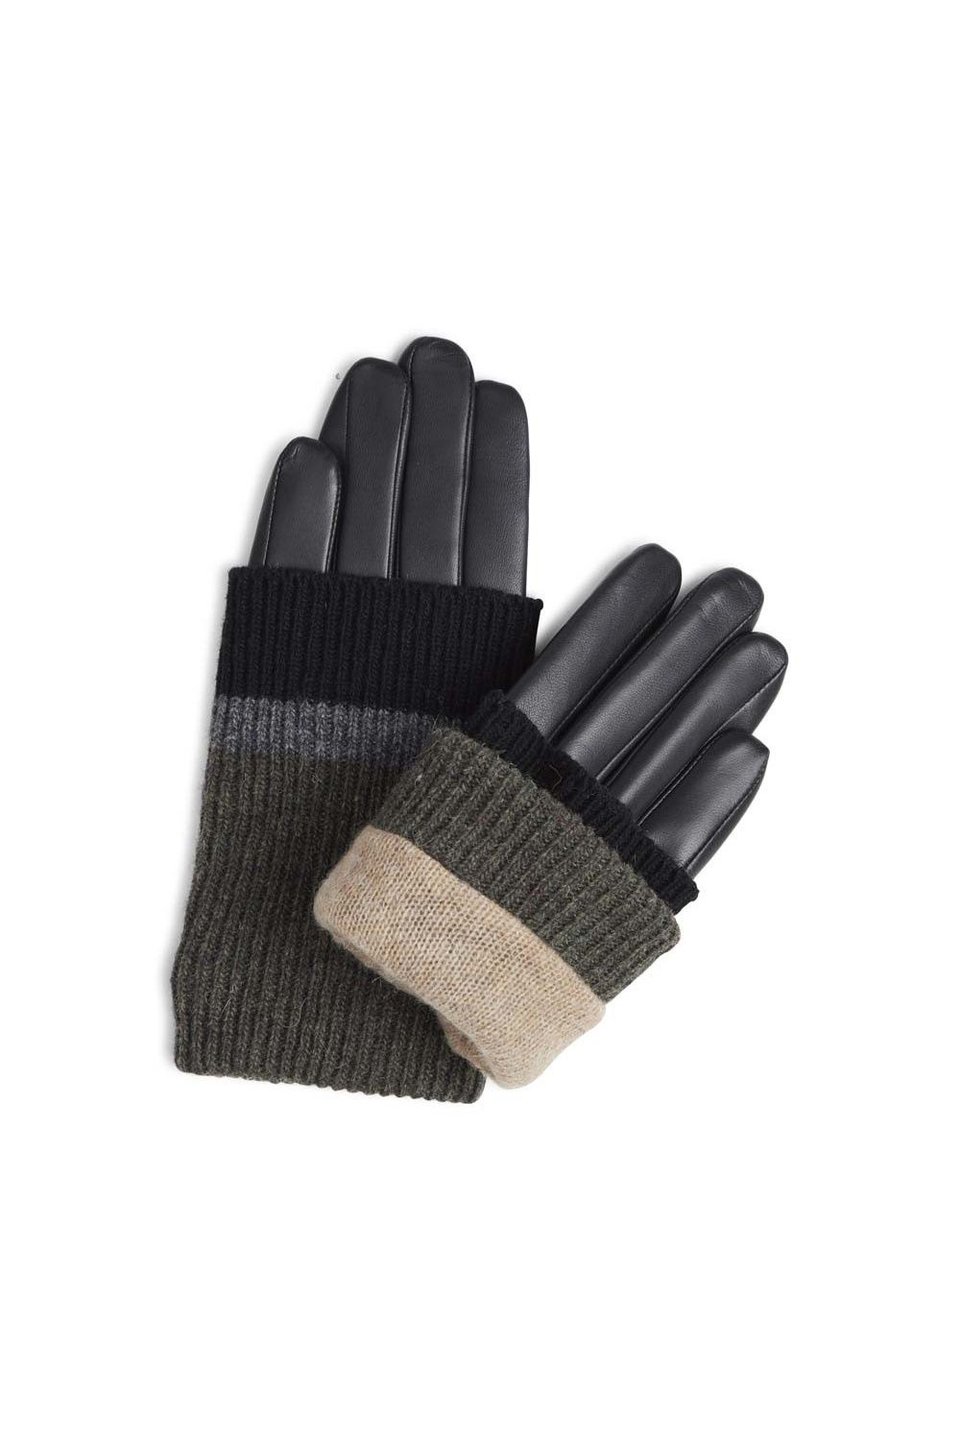 Markberg Helly Glove - Black W/ Black + Grey + Olive